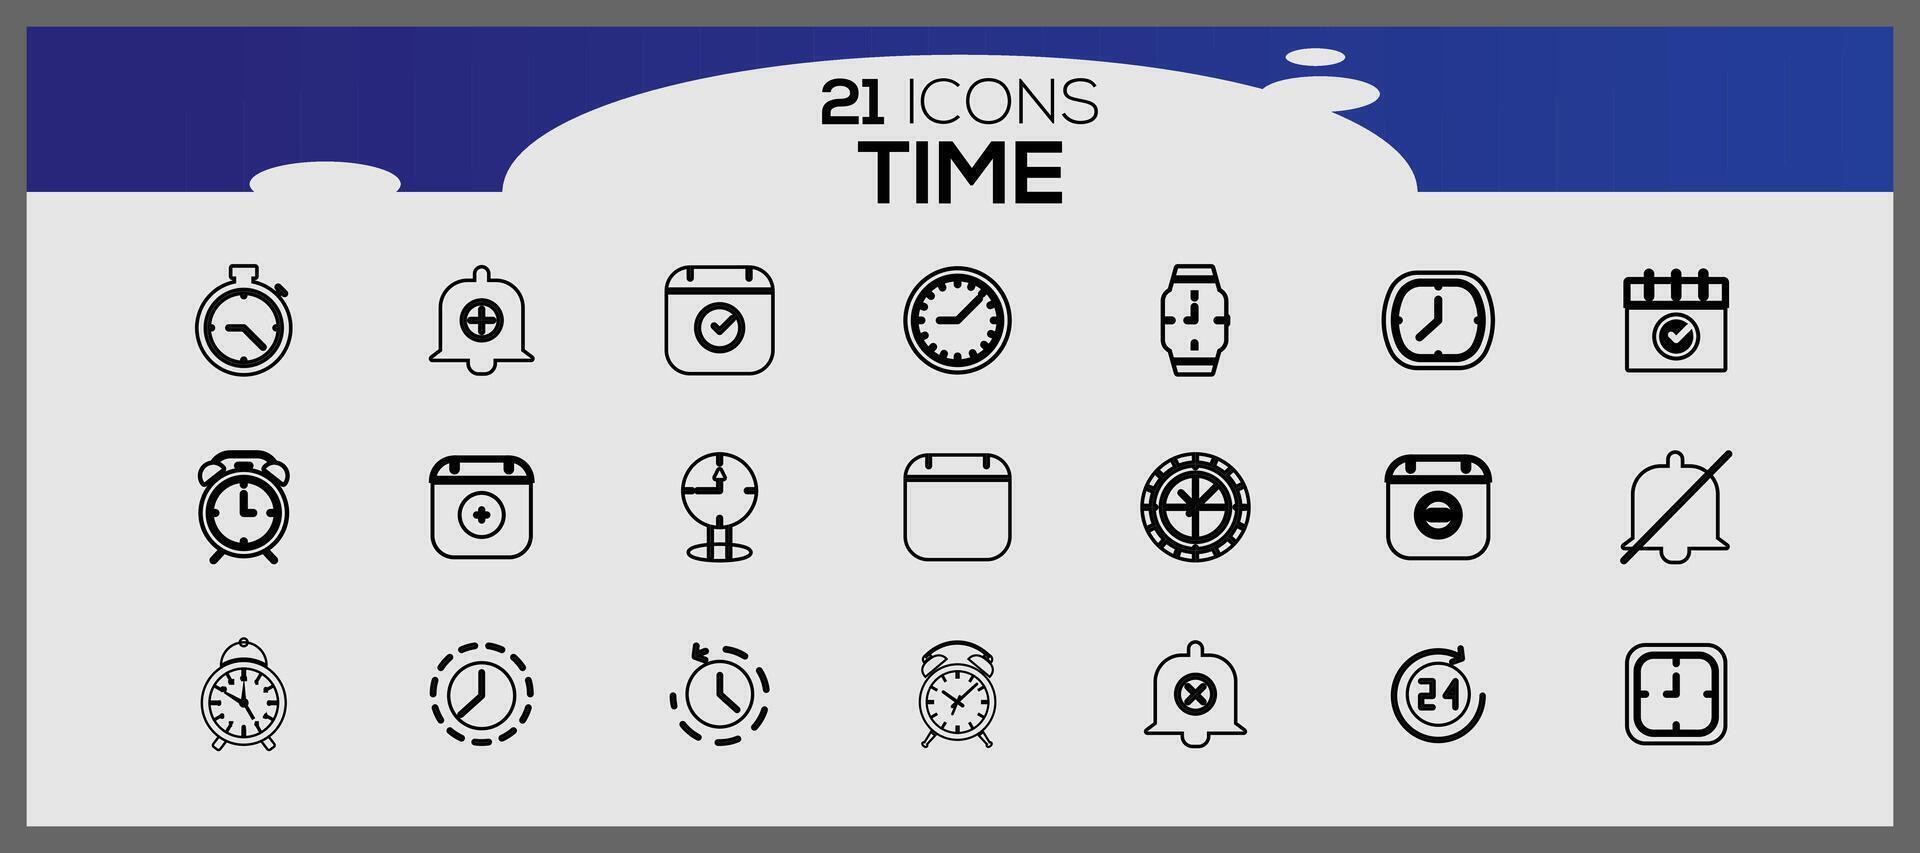 Time icon collection. Time icon set design. vector